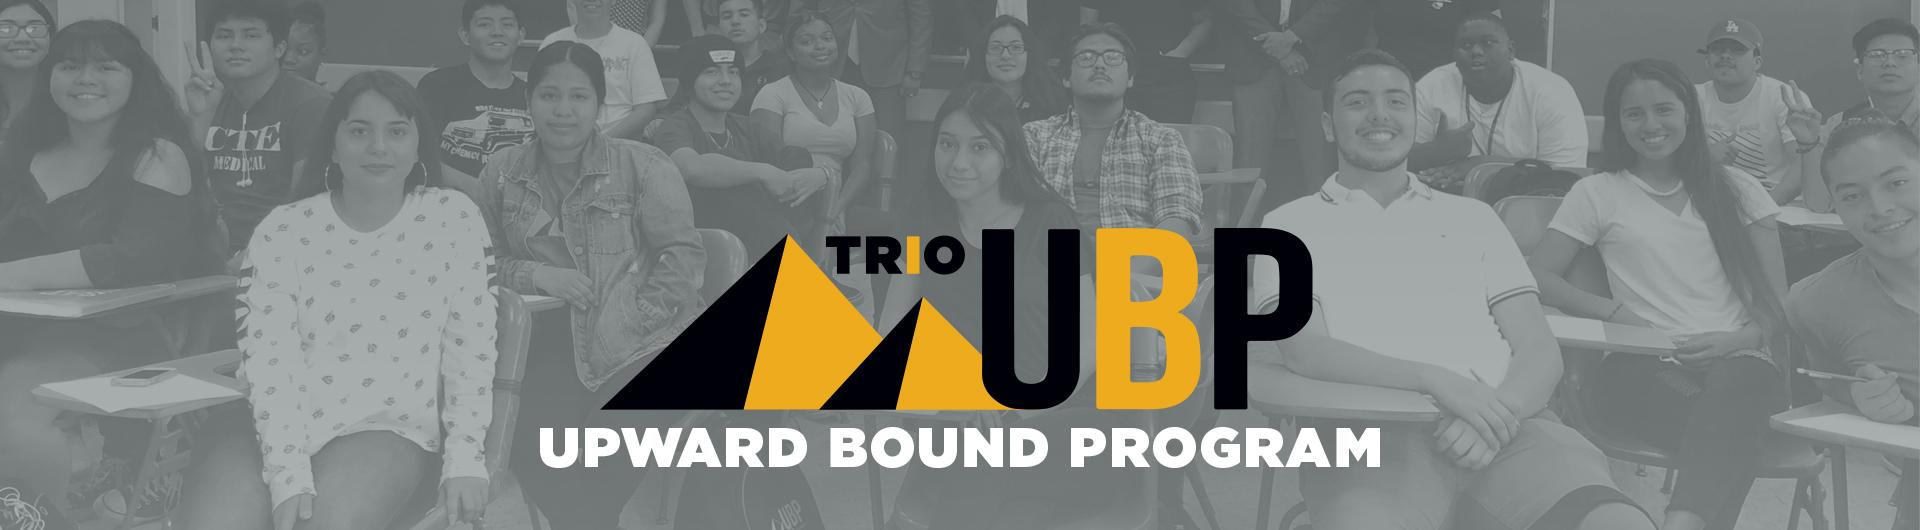 Banner for Upward Bound Program